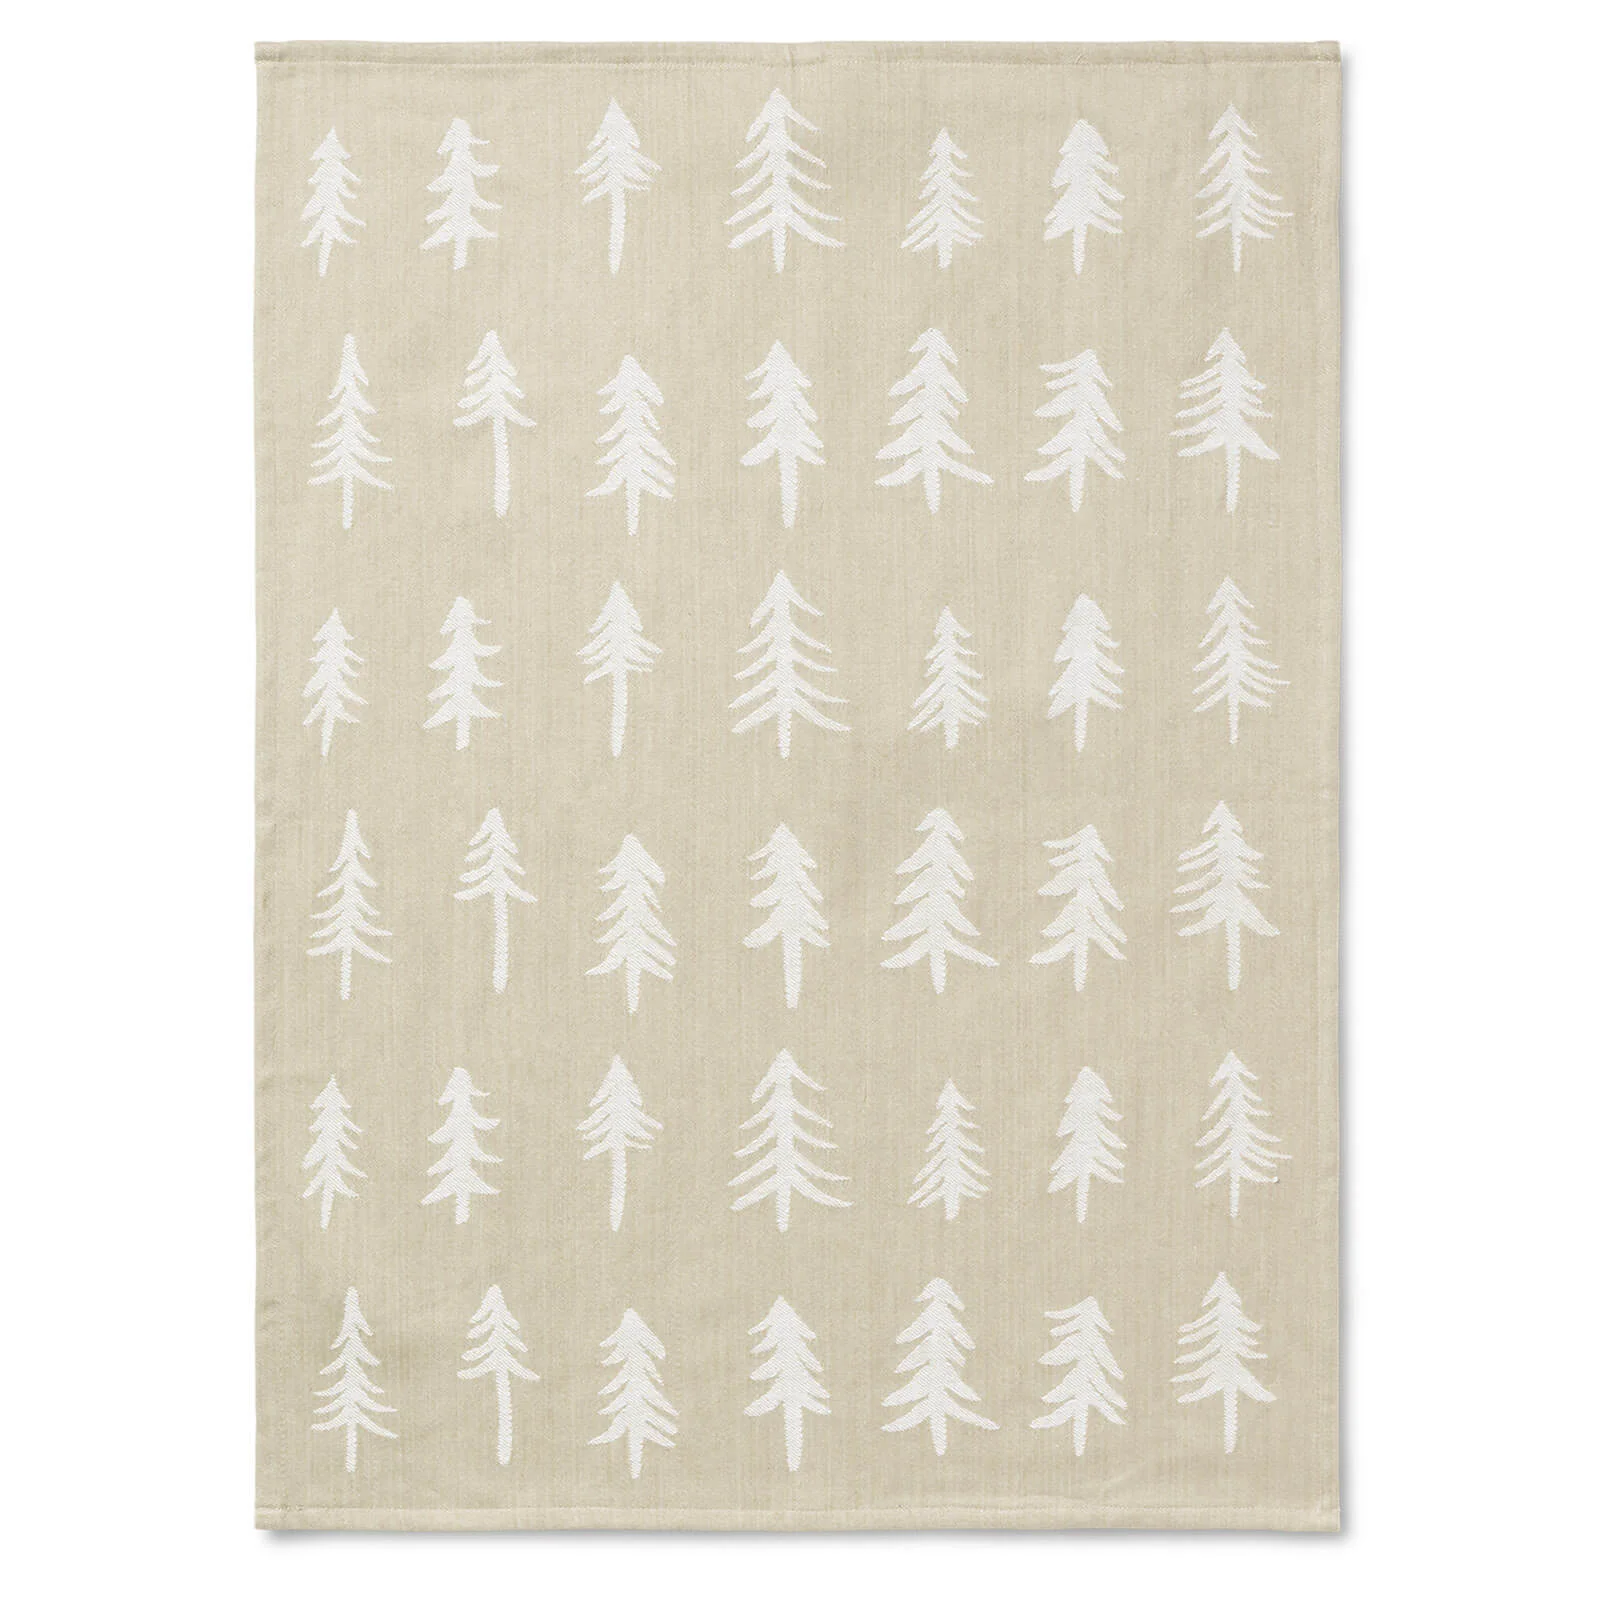 Ferm Living Christmas Tea Towel - Sand Image 1